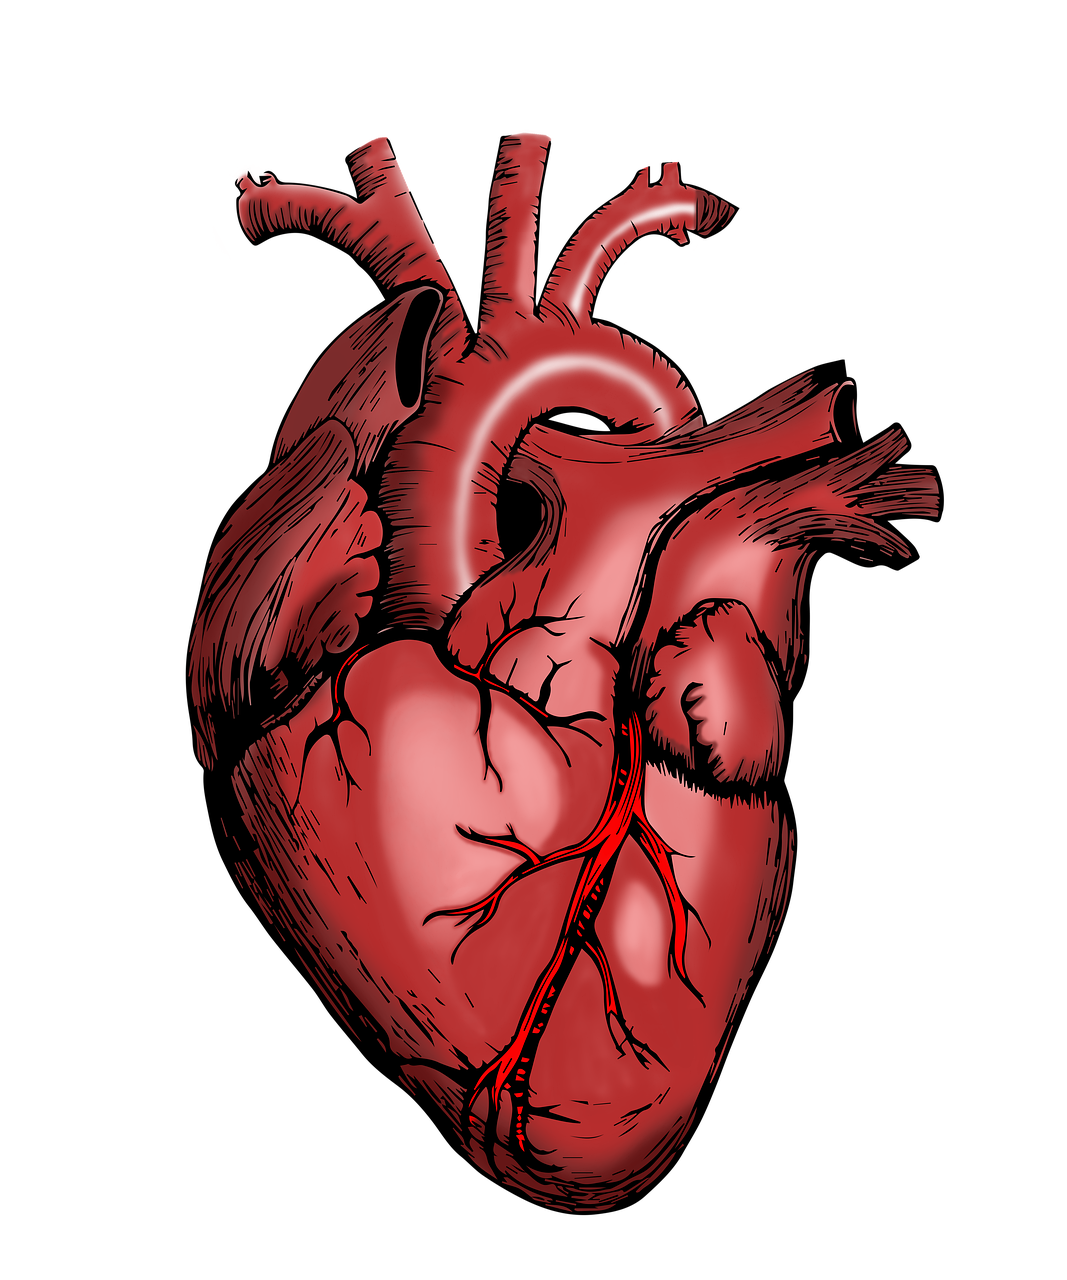 Heart Surgeon The LifeSaving Artistry